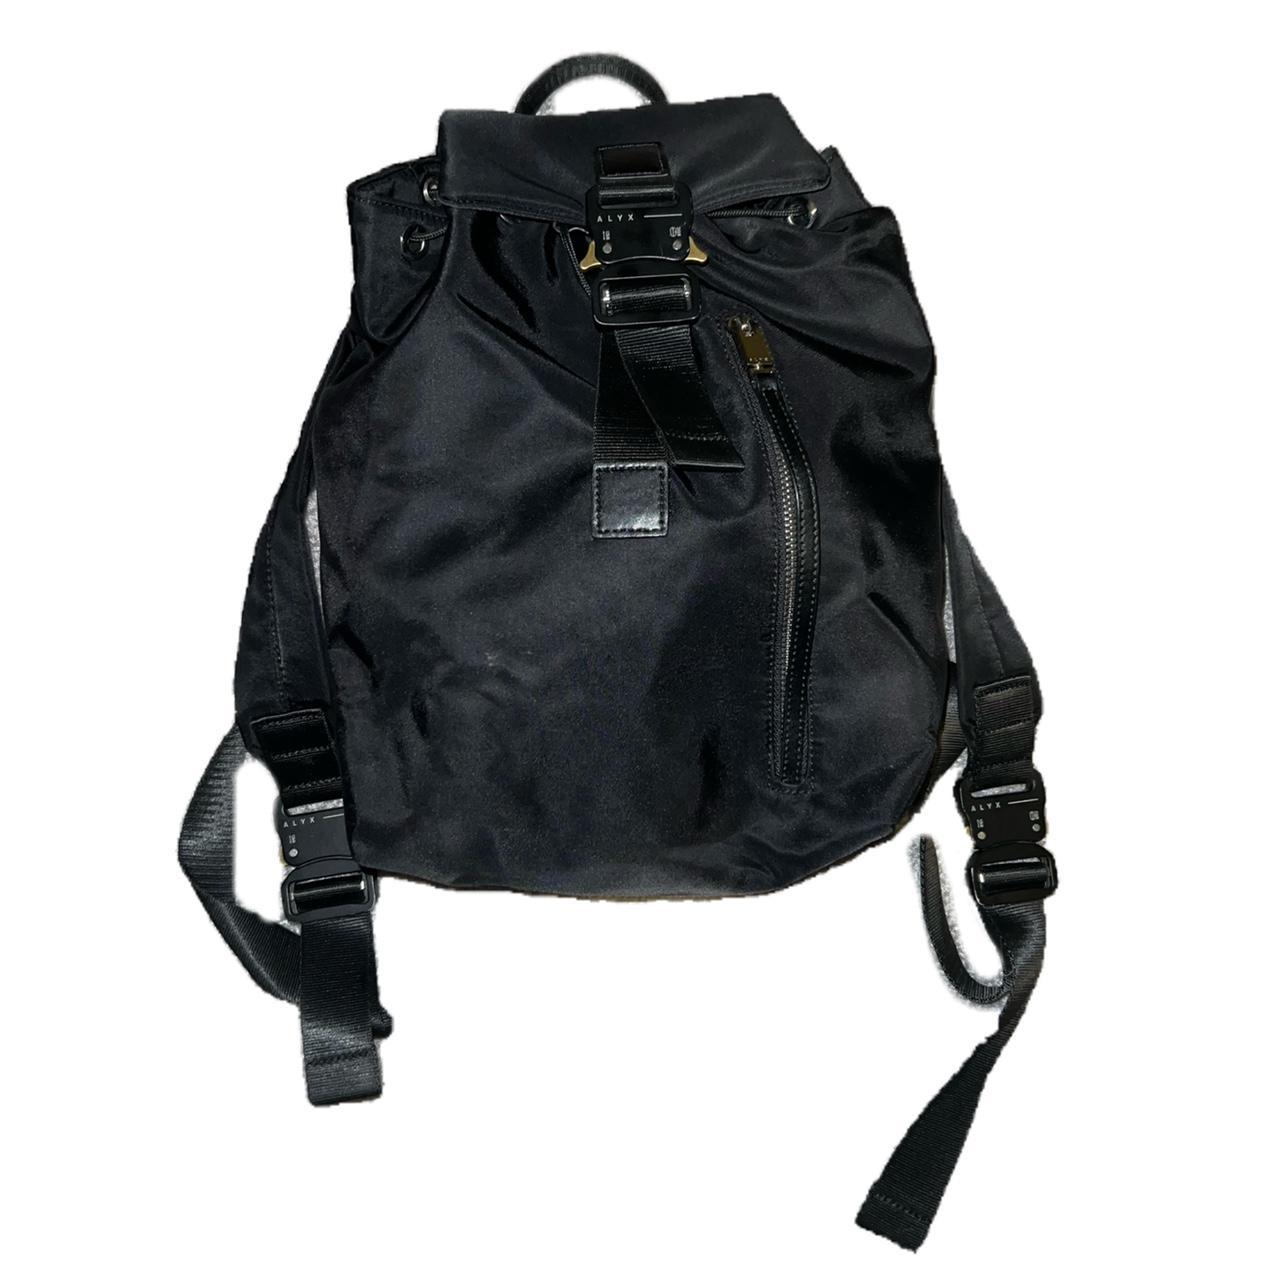 Alyx black tank backpack - Depop